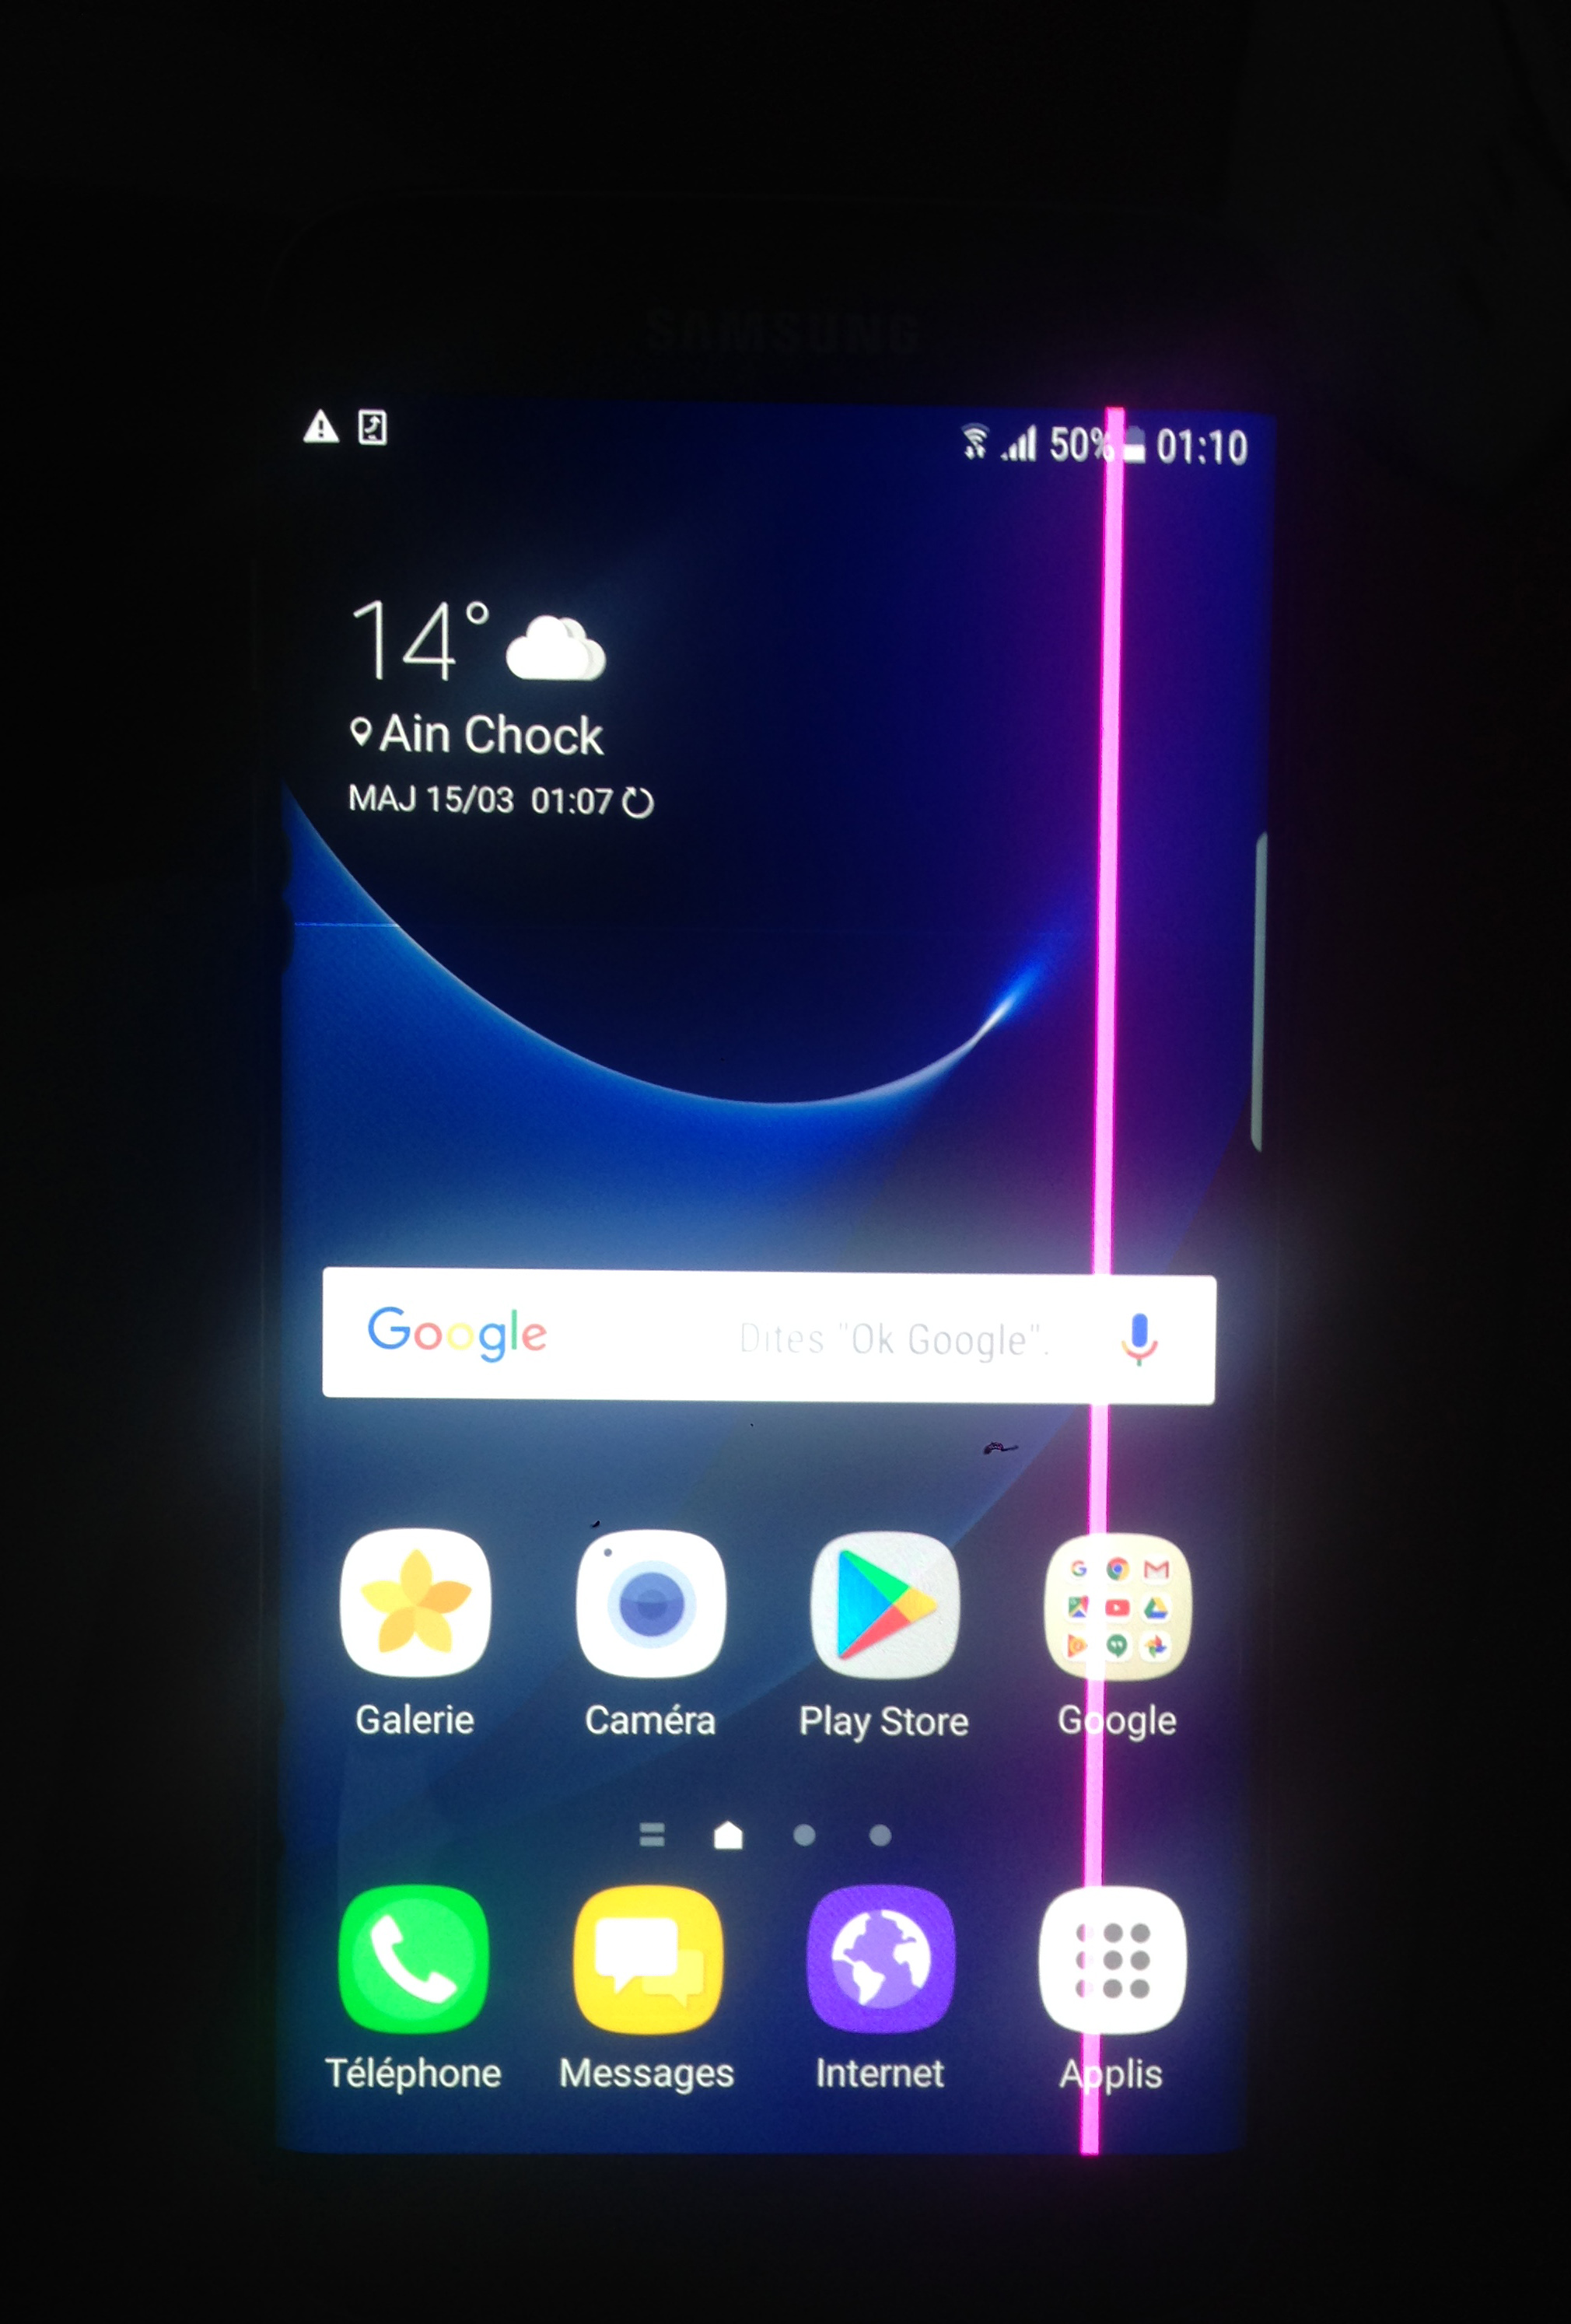 Samsung Galaxy S7 Edge Noir 32Go avec accessoires